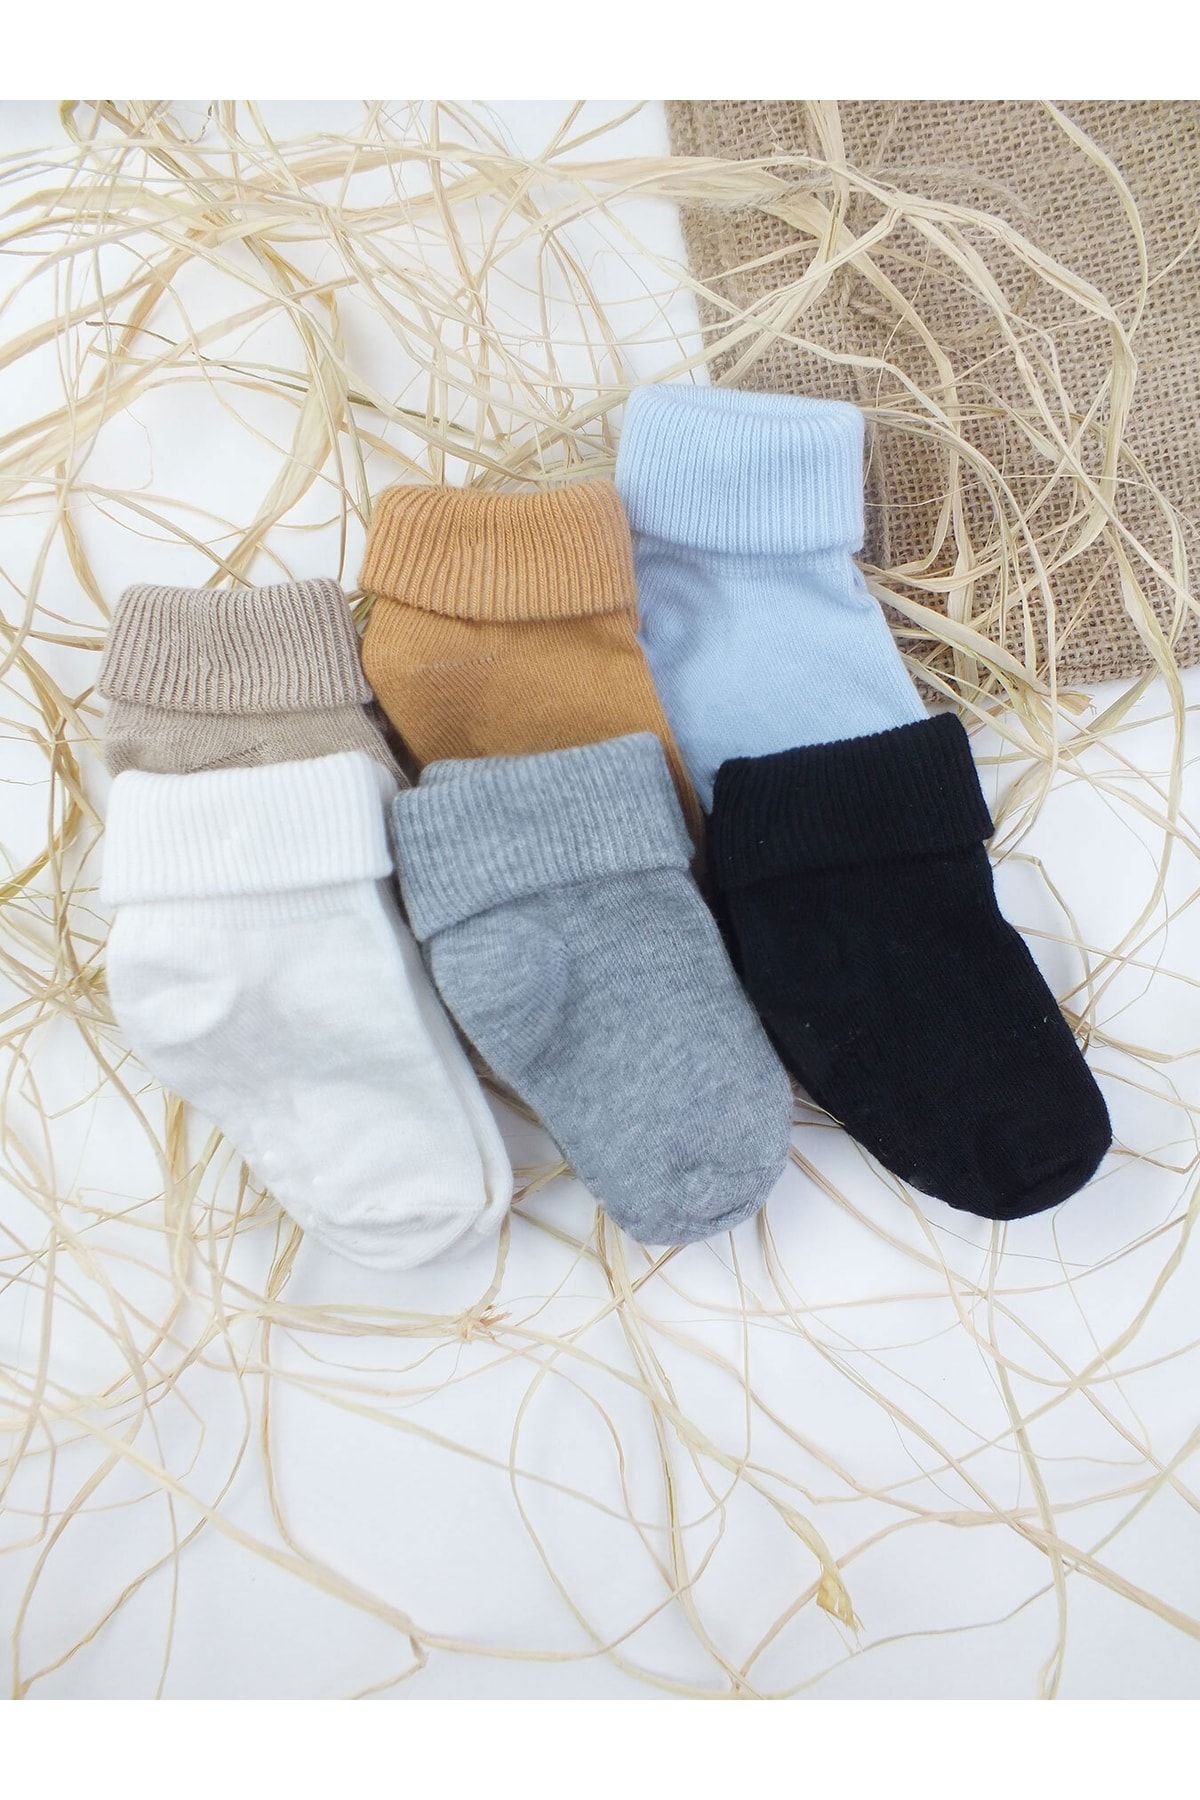 Color Socks 6 Pack Newborn Organic Newborn Baby Socks (extra Soft